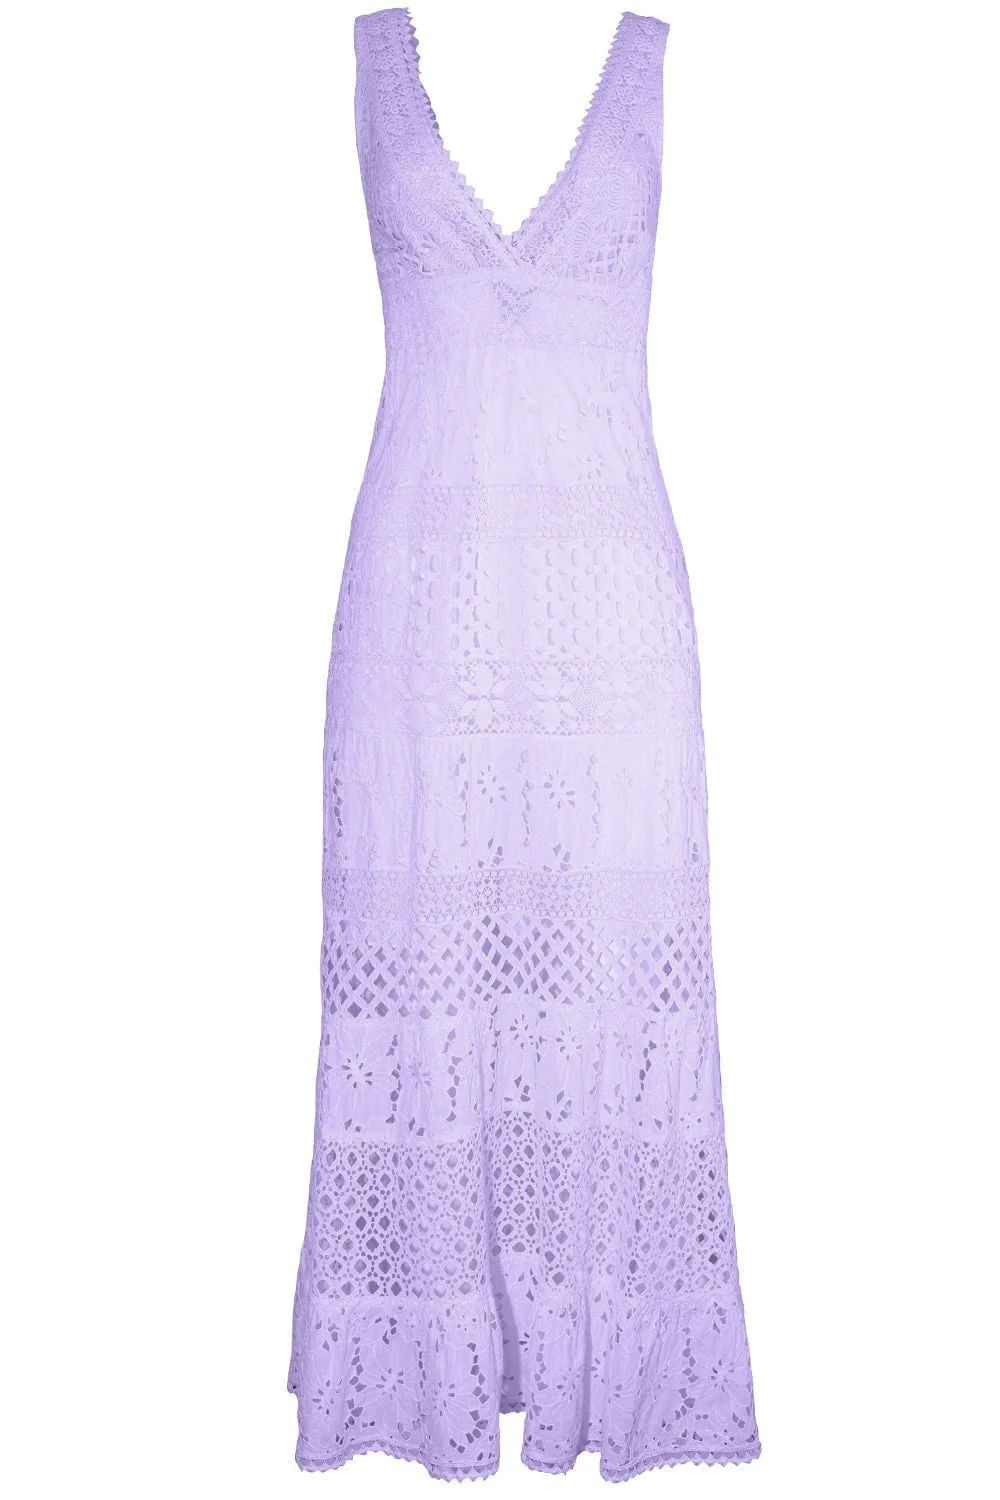 Morganite Dress - Lillia | Marissa Collections